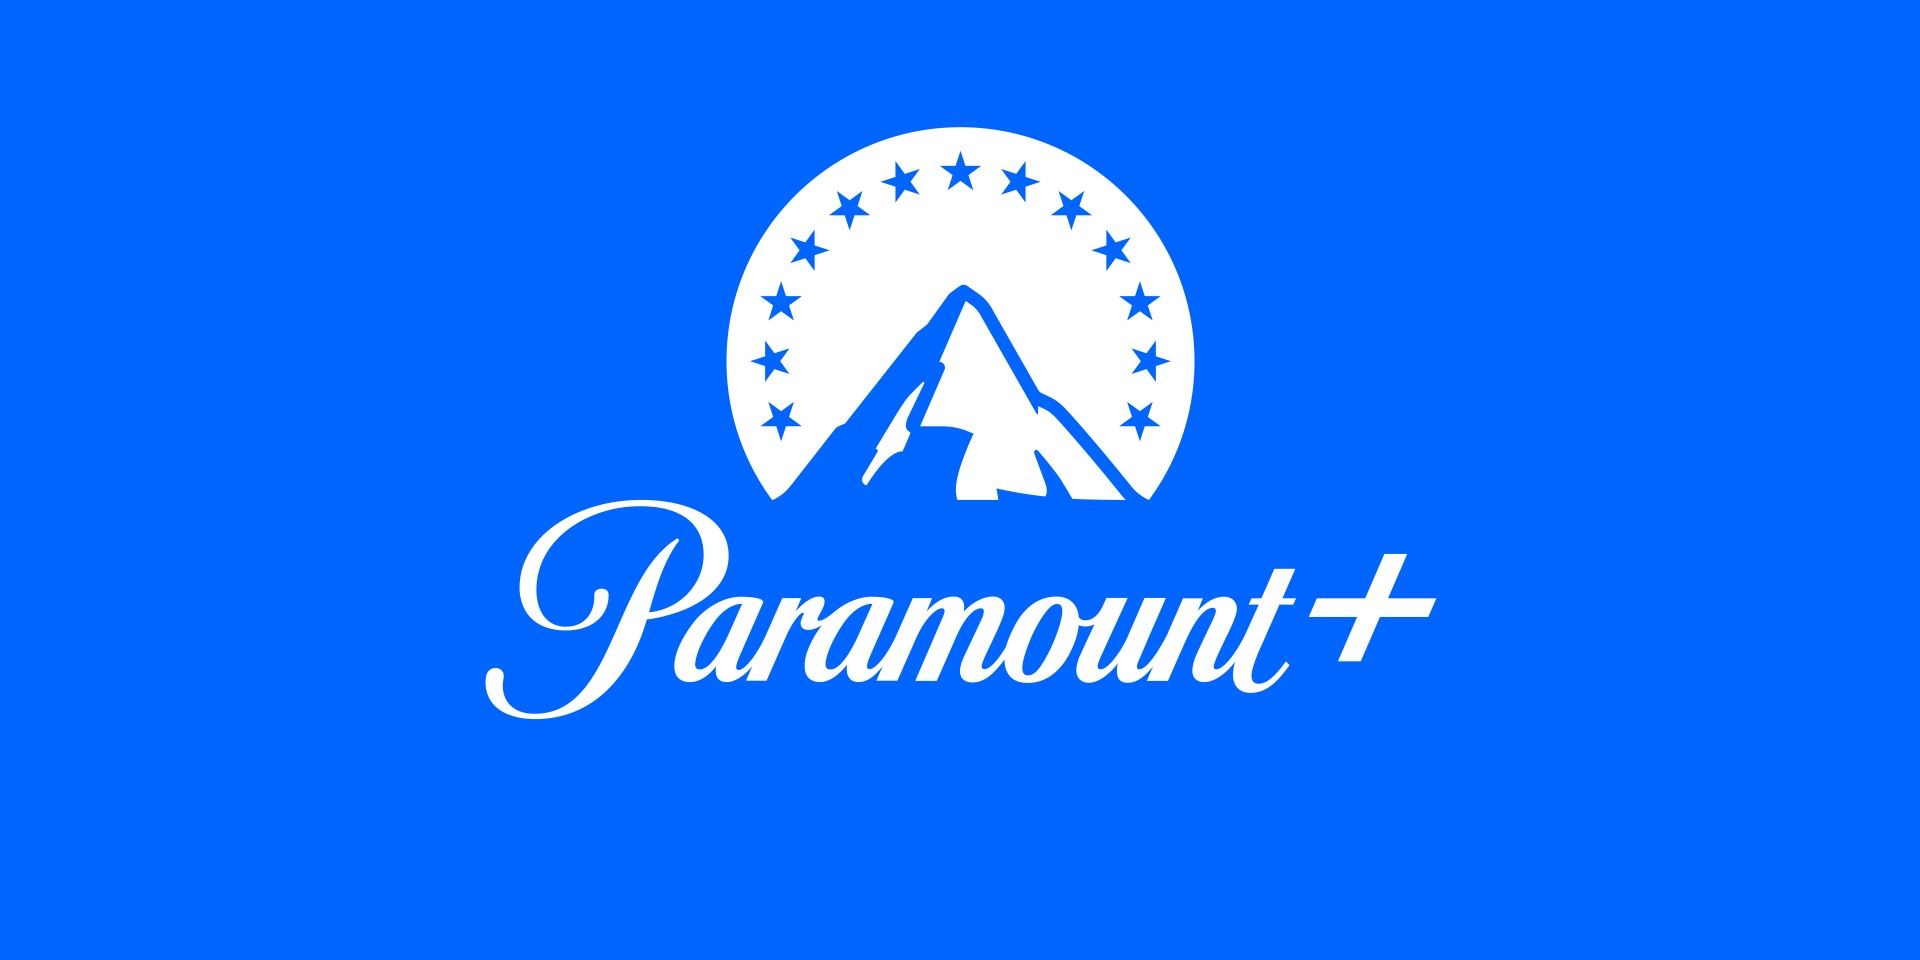 Paramount+ Logo Feature